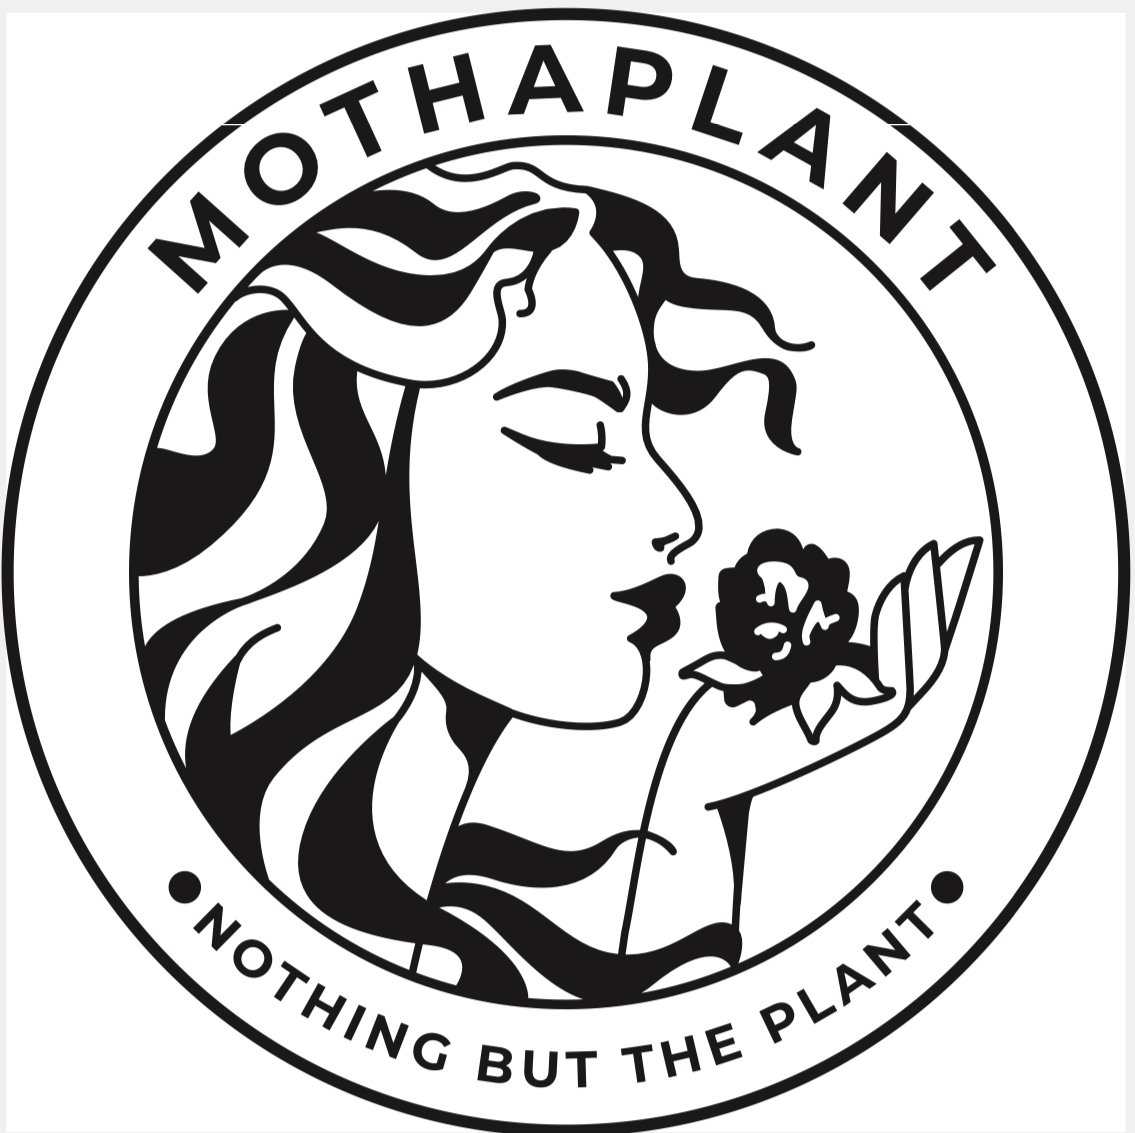 Mothaplant